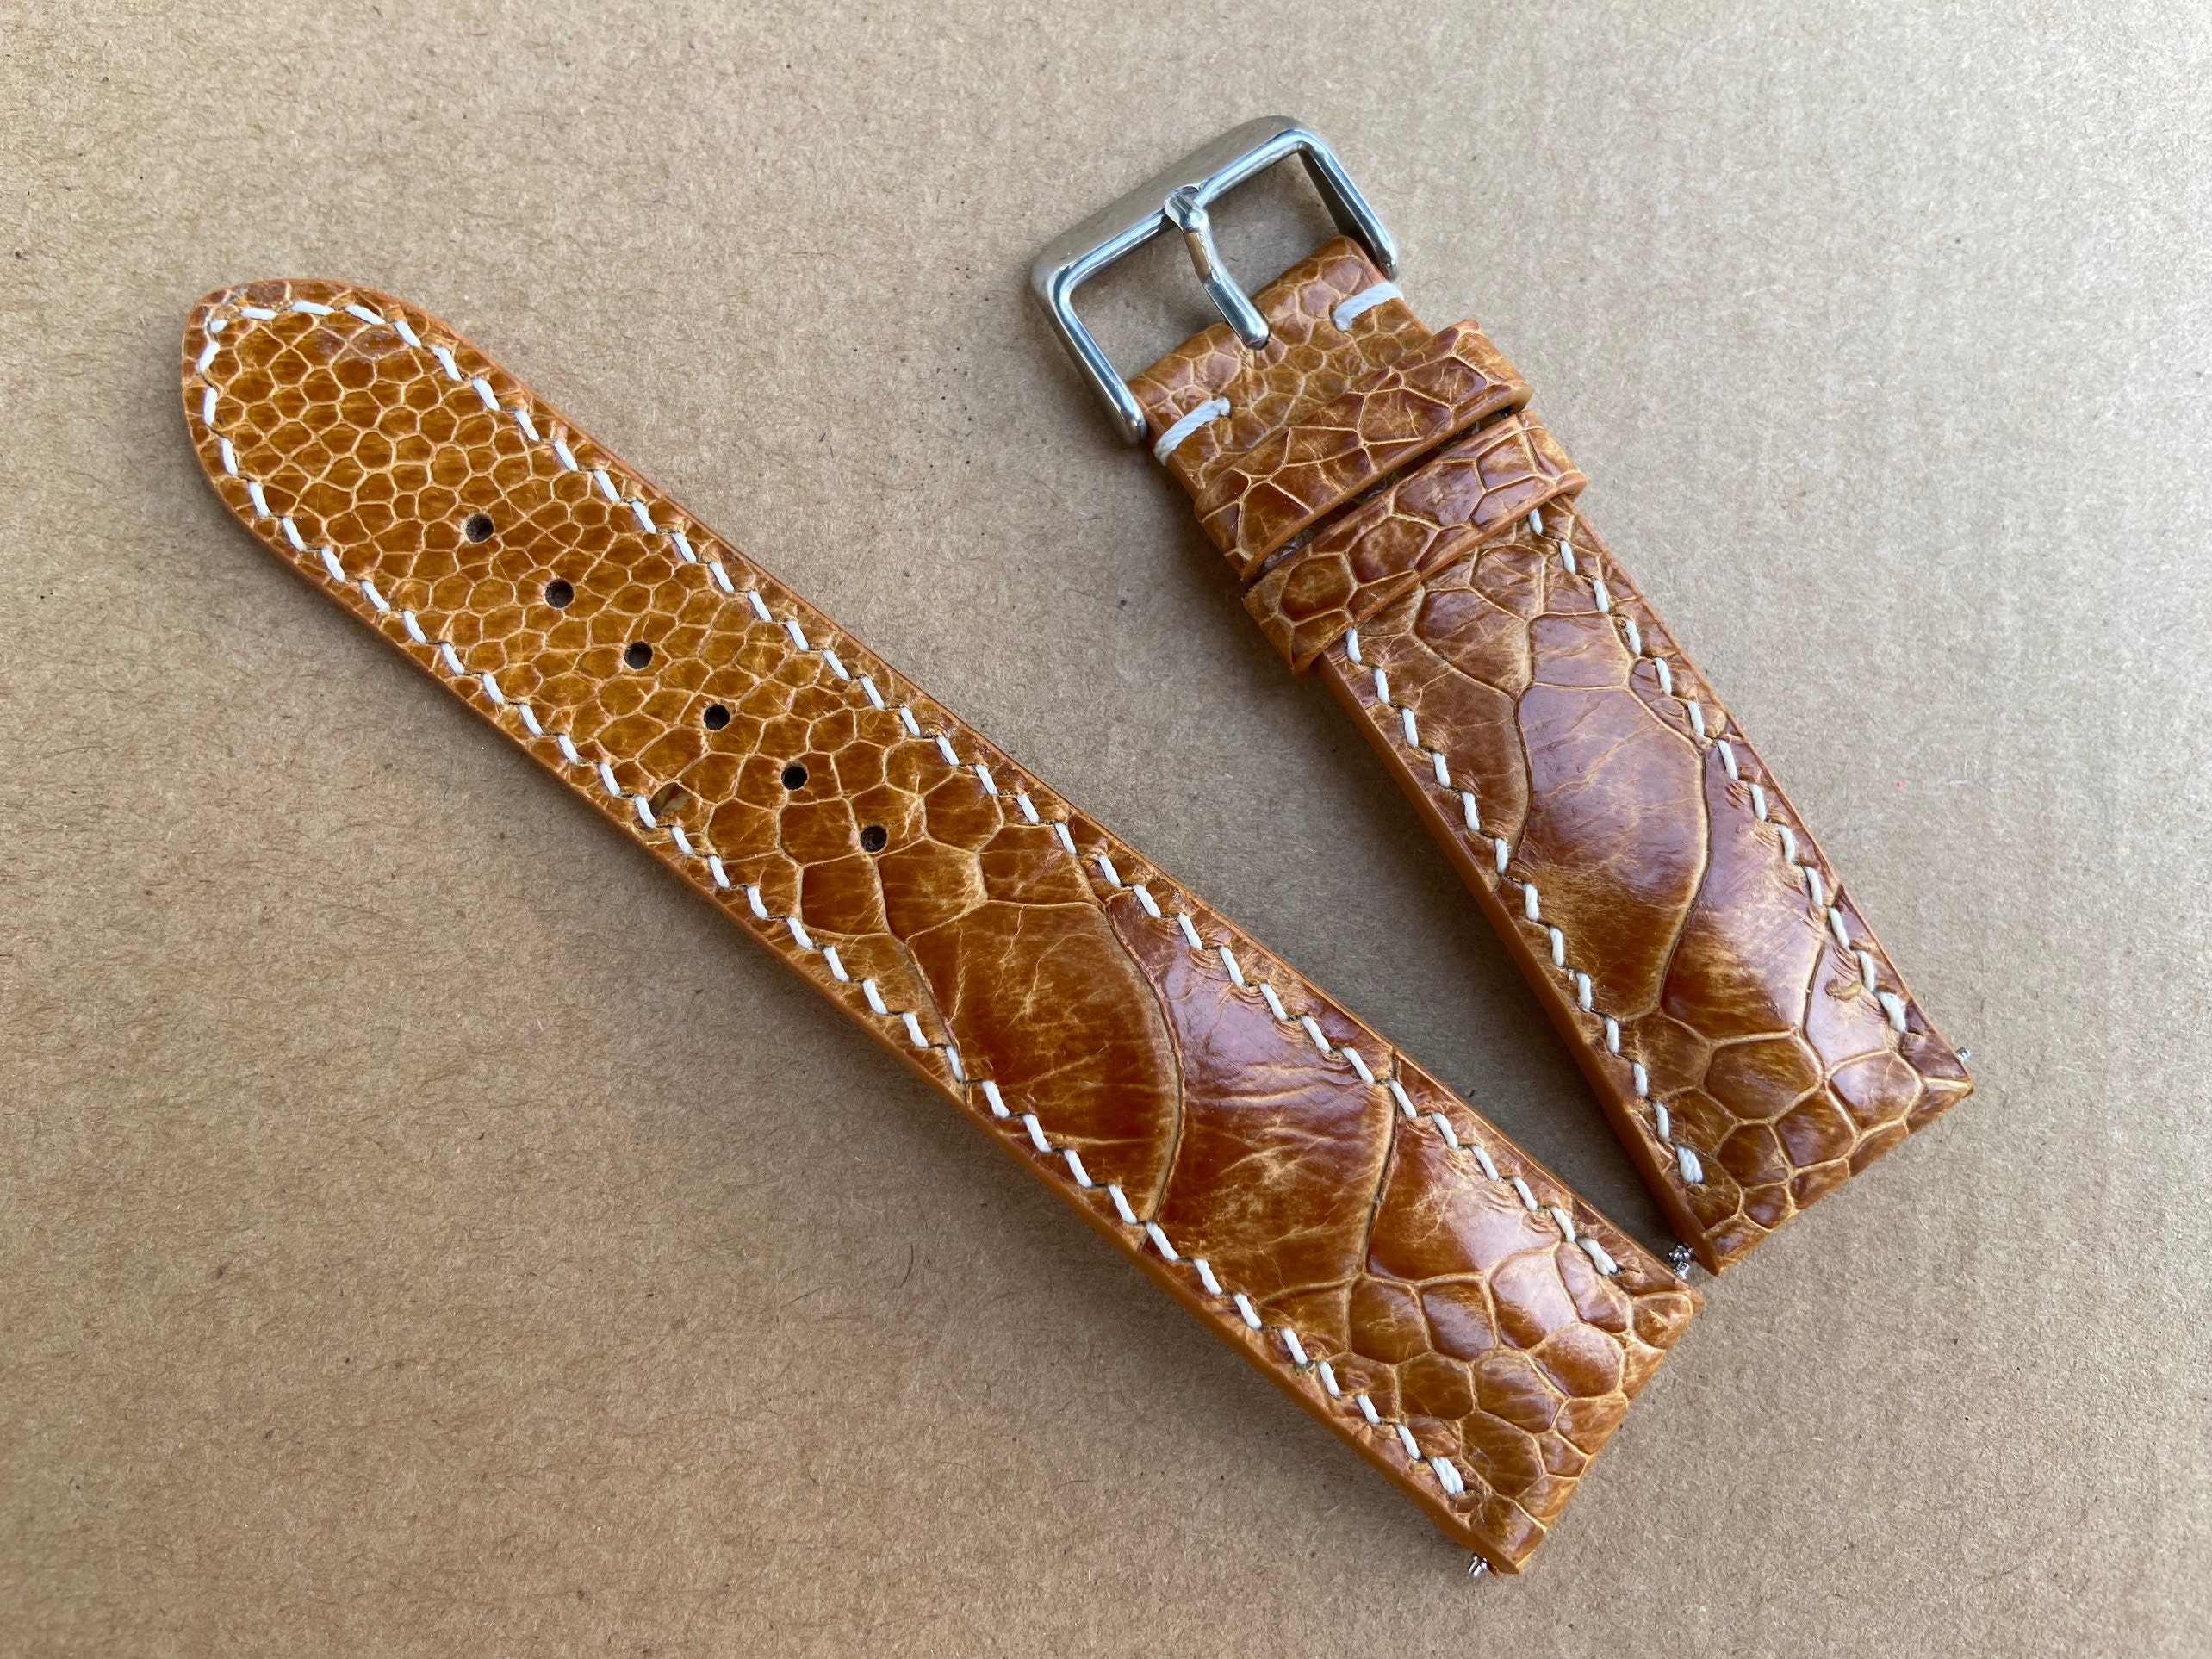 Hirsch Massai Ostrich Leather Watch Strap - Golden Brown - L - 20mm / 16mm - Shi